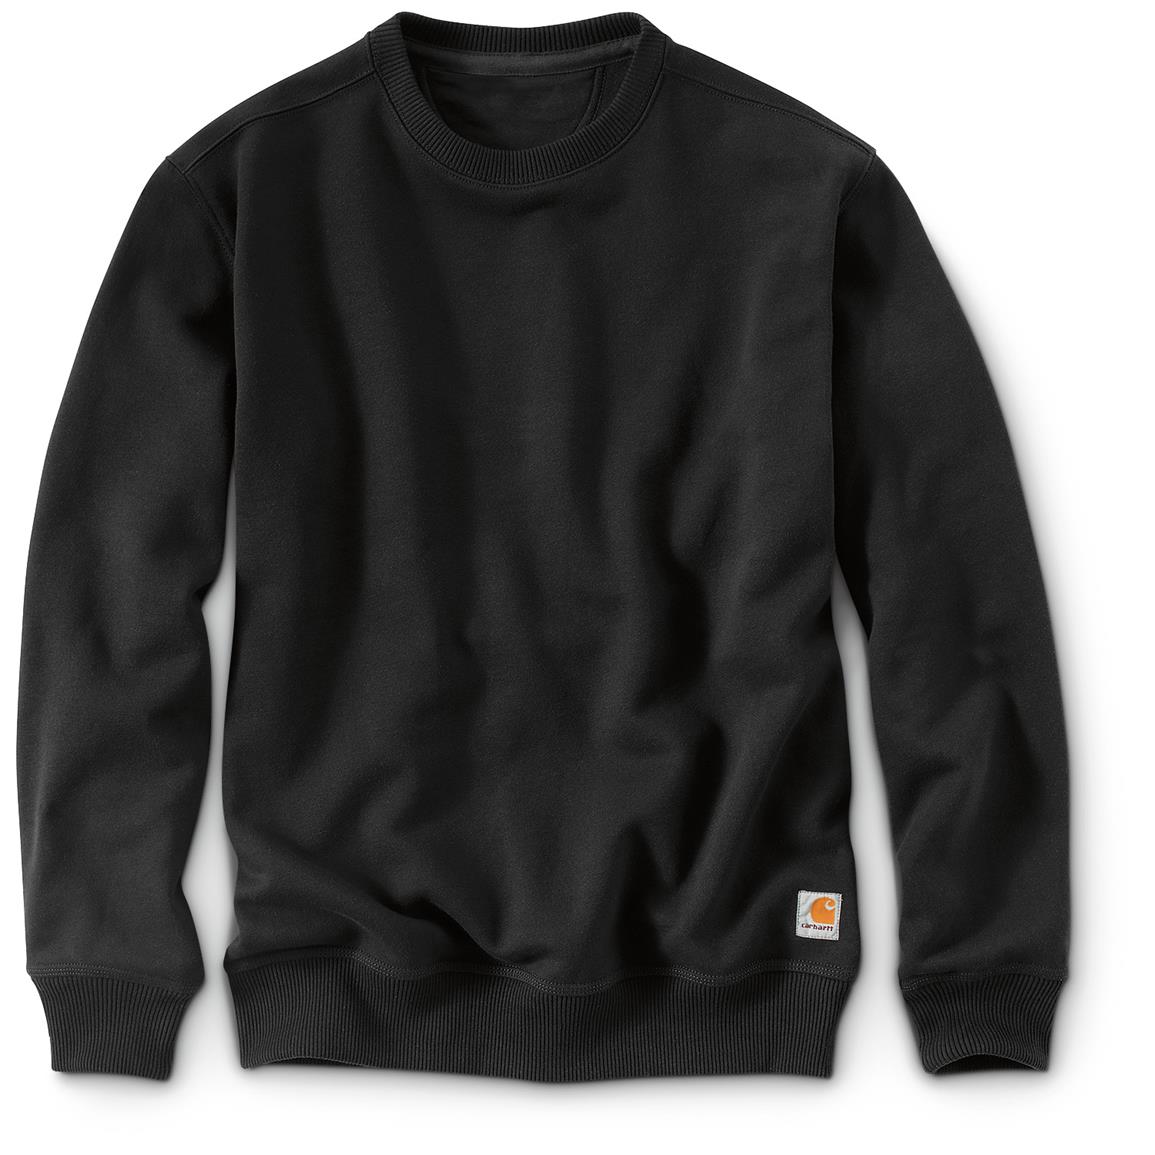 Carhartt Rain Defender Paxton Shirt - 623526, Sweatshirts & Hoodies at ...